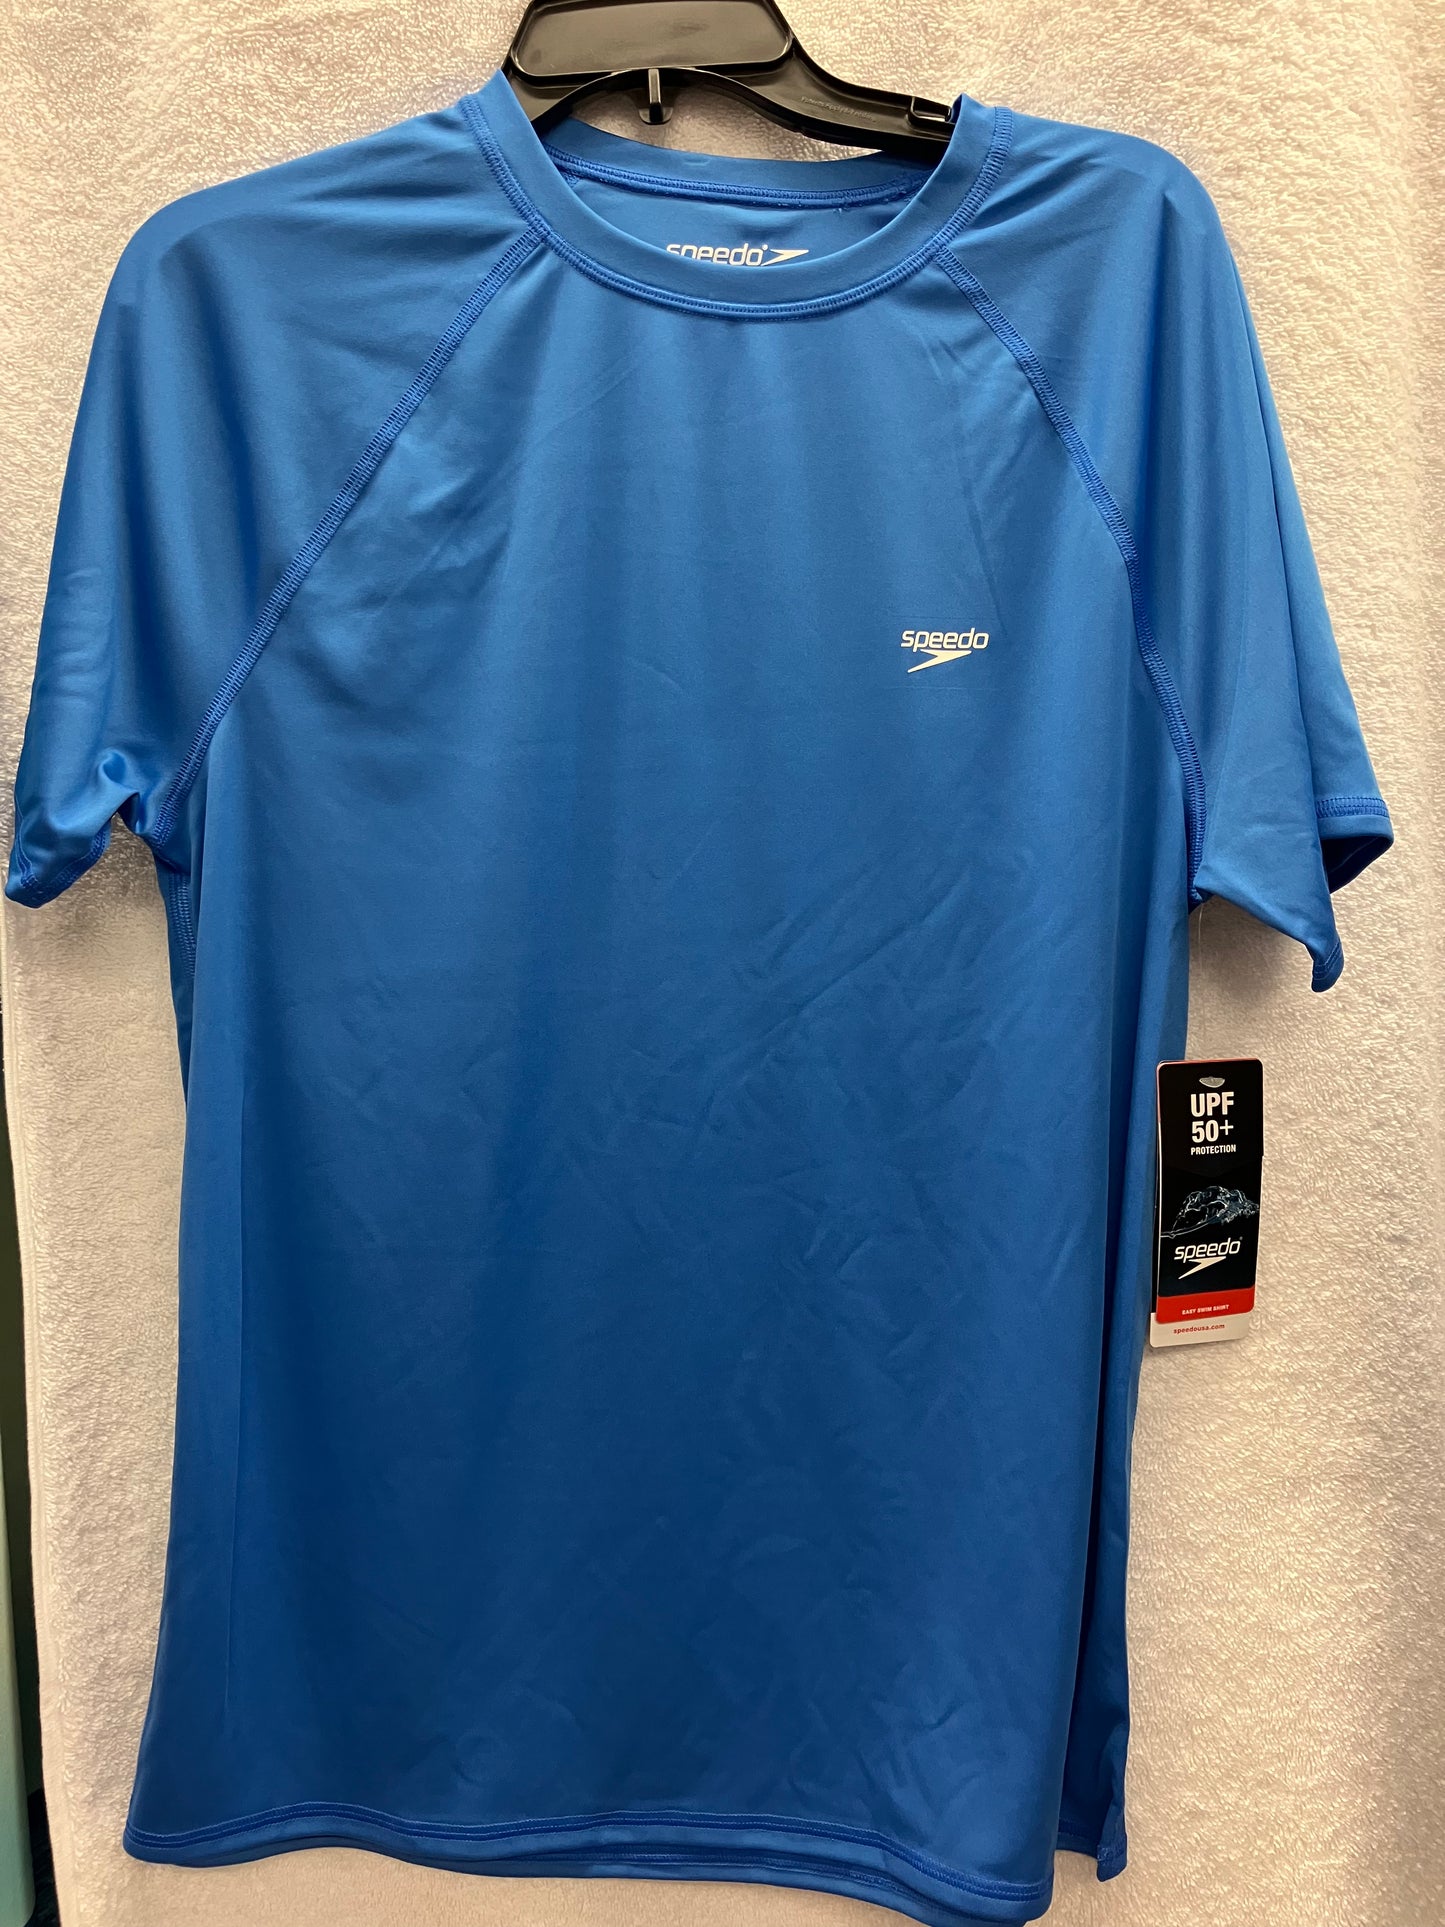 Speedo Palace Blue Easy Swim Shirt Size Medium